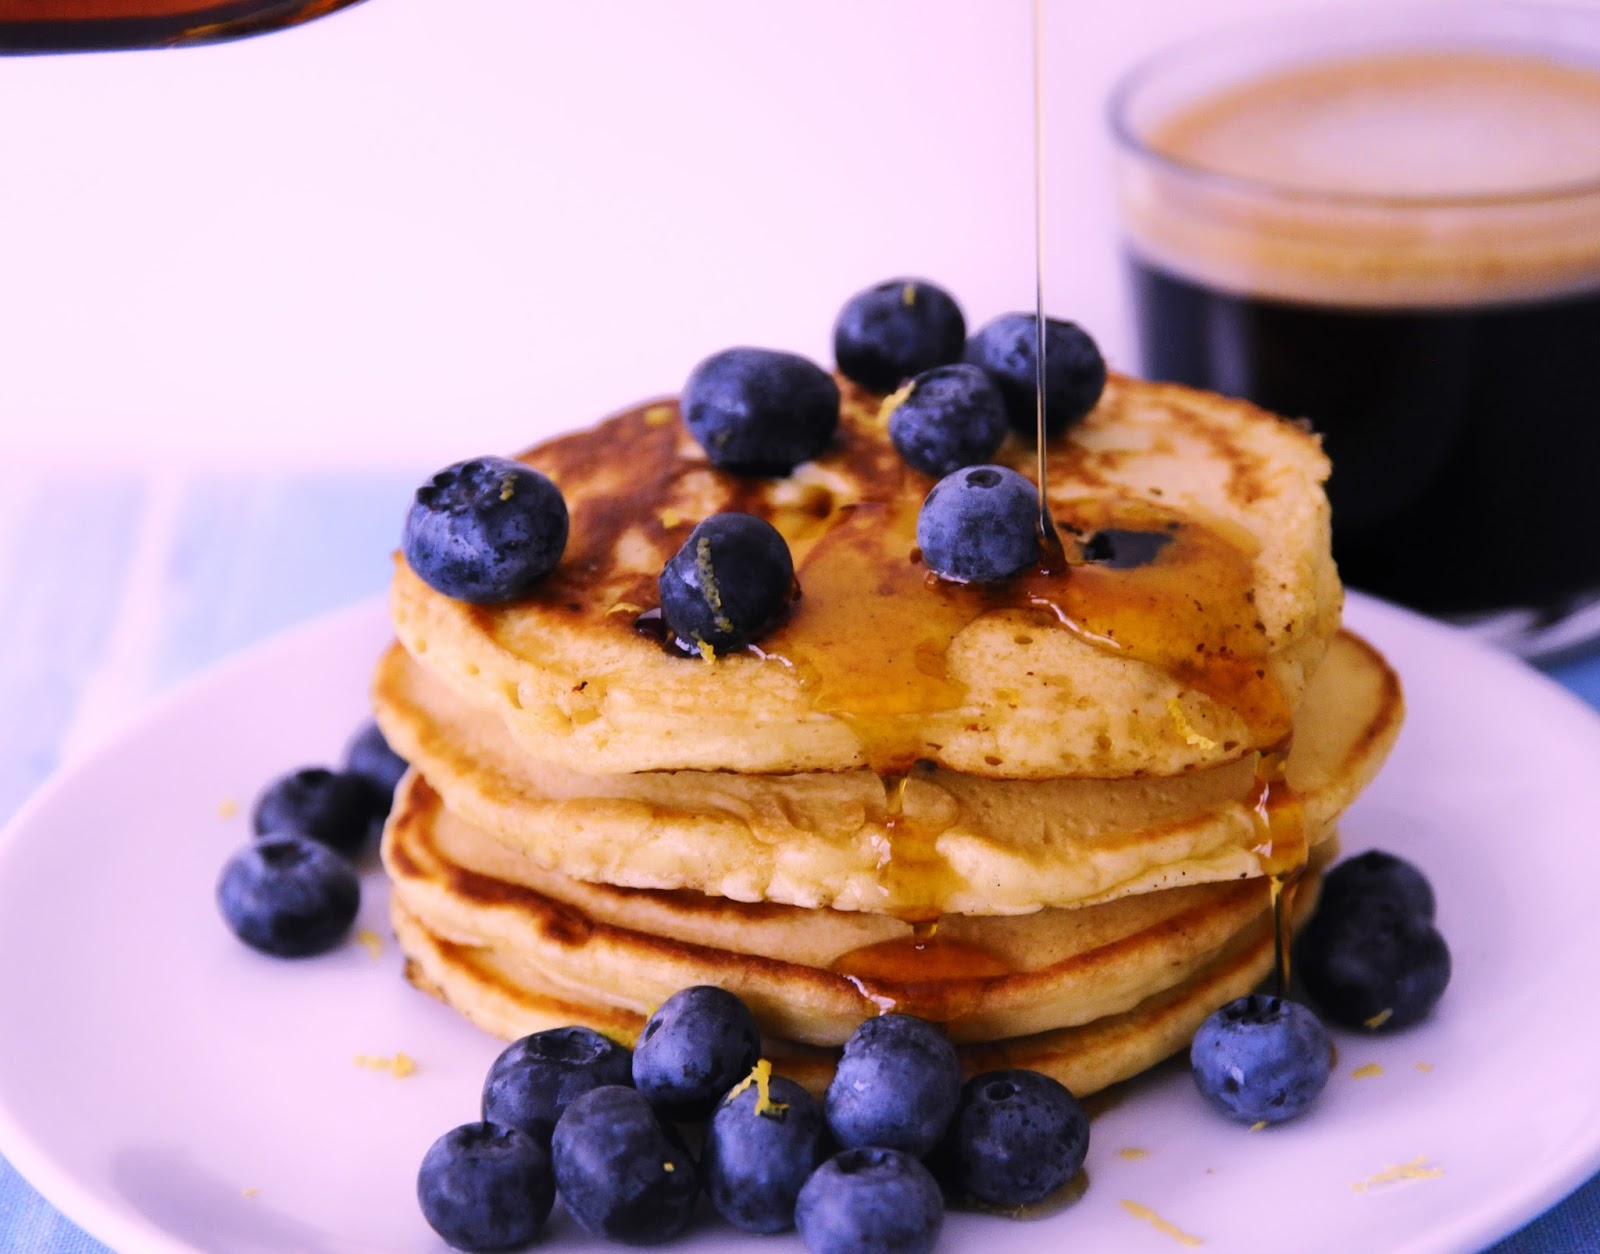 Yummy buttermilk blueberry pancakes